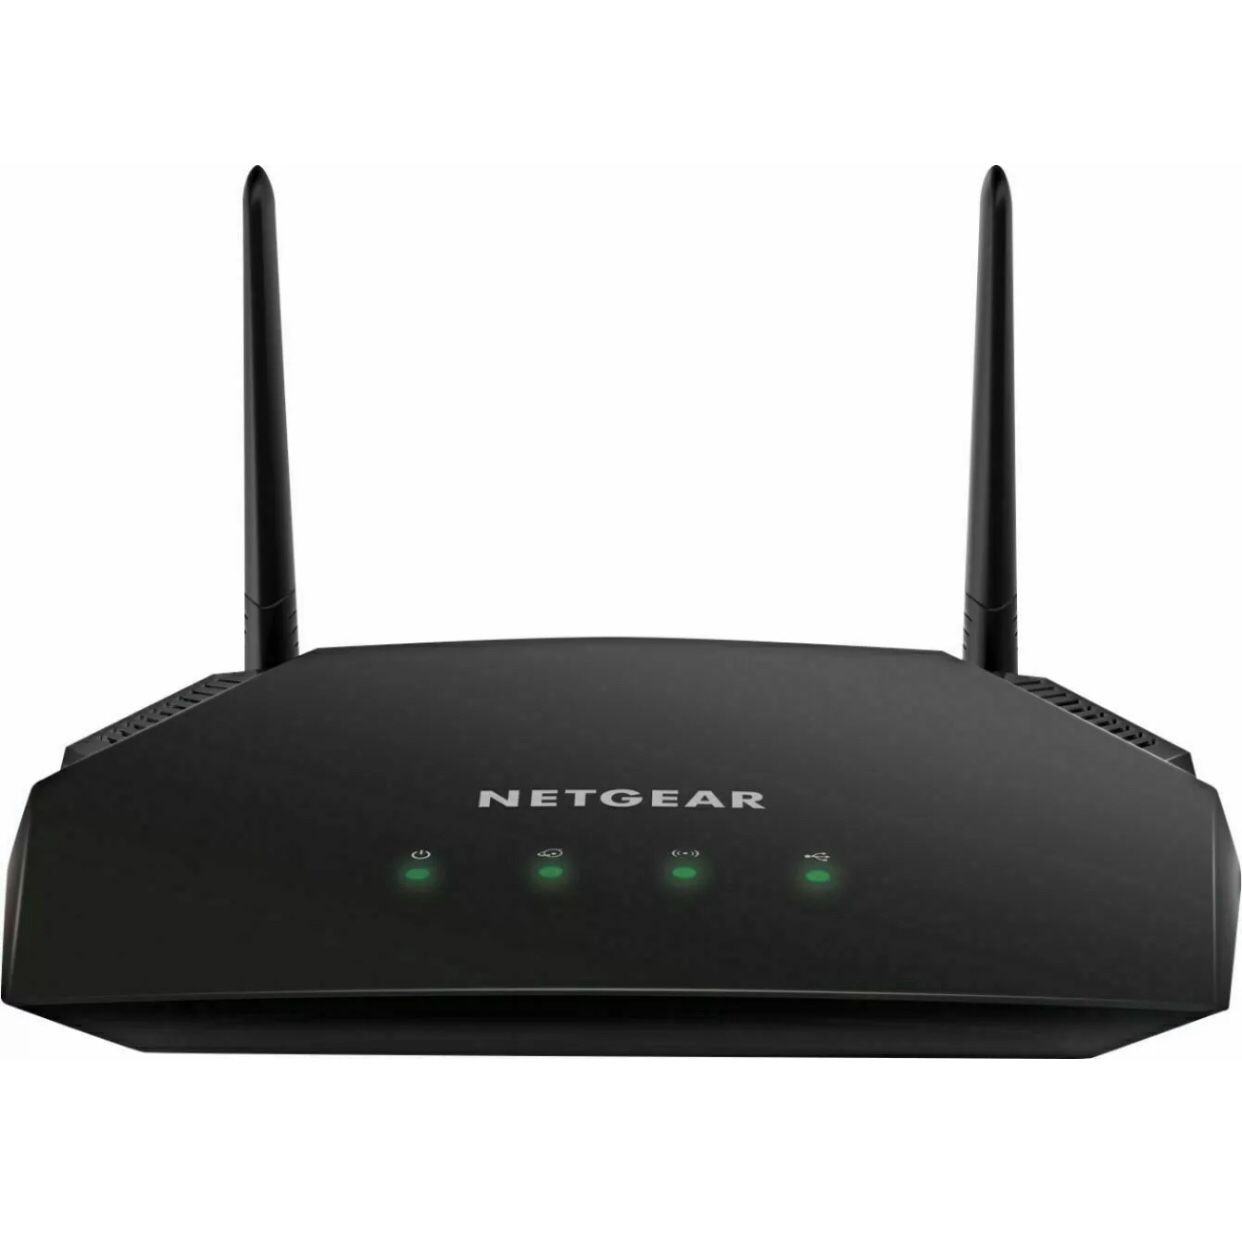 Netgear AC1600 Smart WiFi Dual Band Gigabit Router